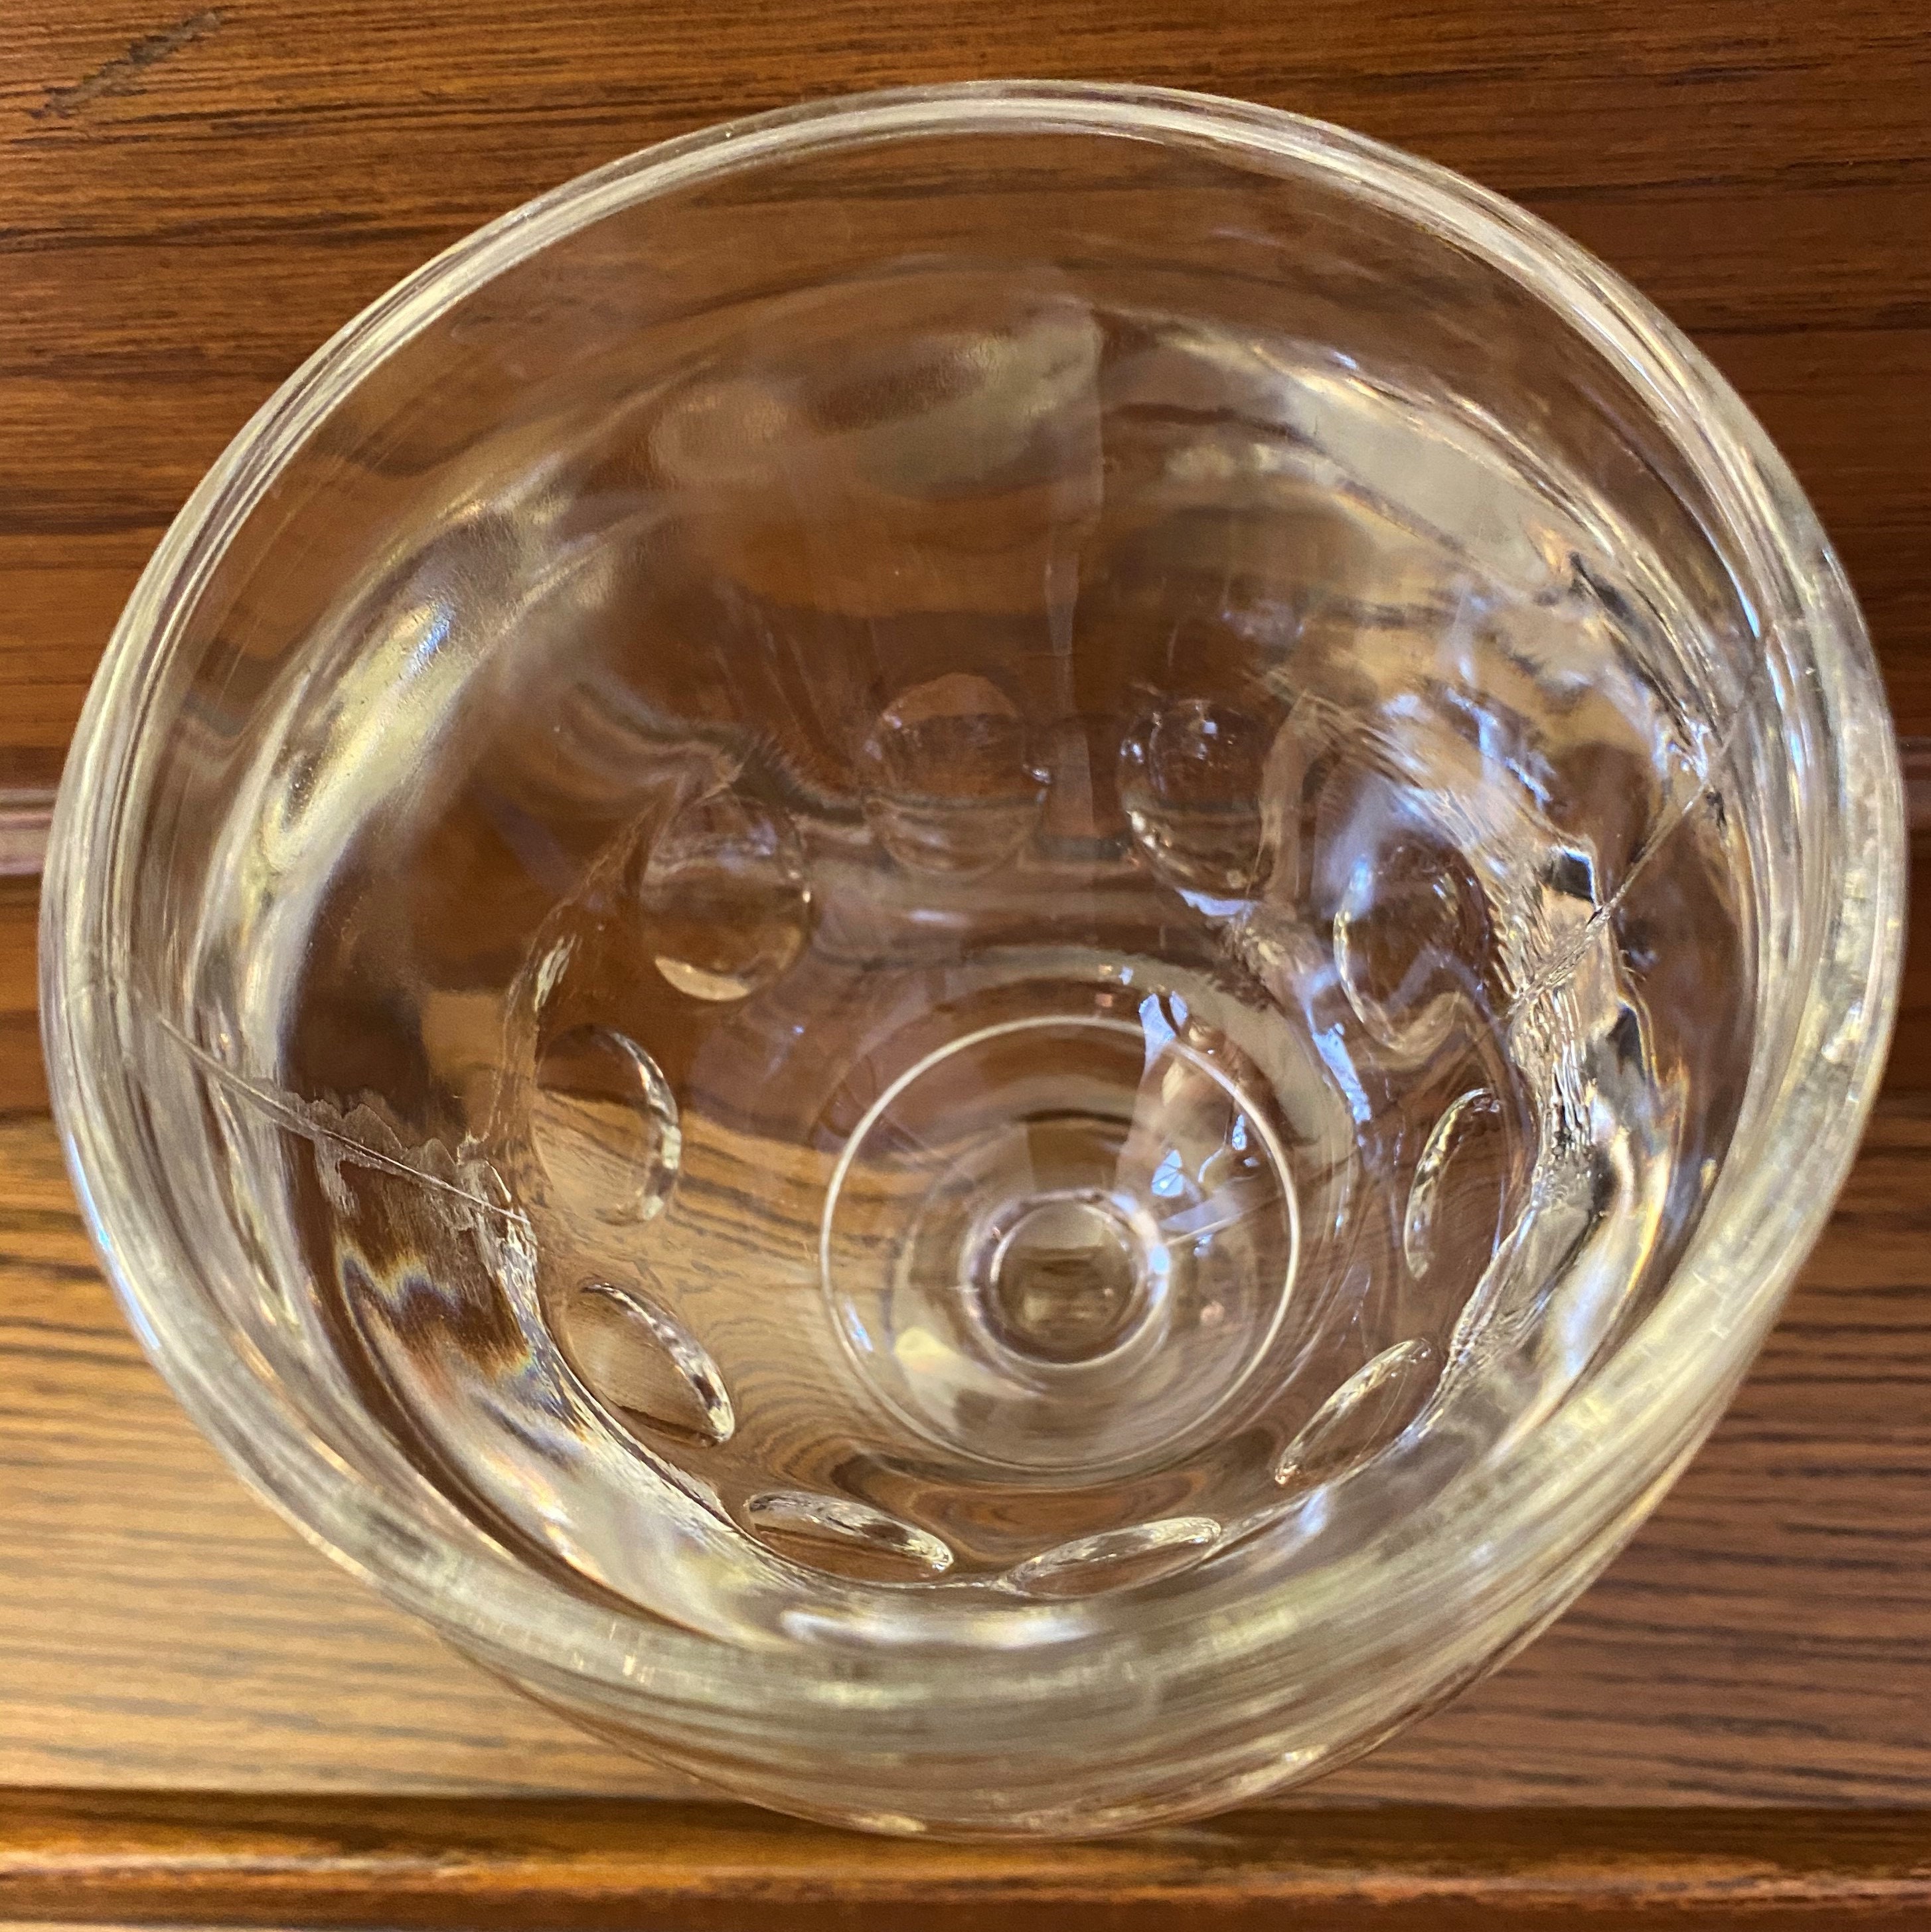 Grand verre transparent de 16 oz avec empreintes digitales, tasse